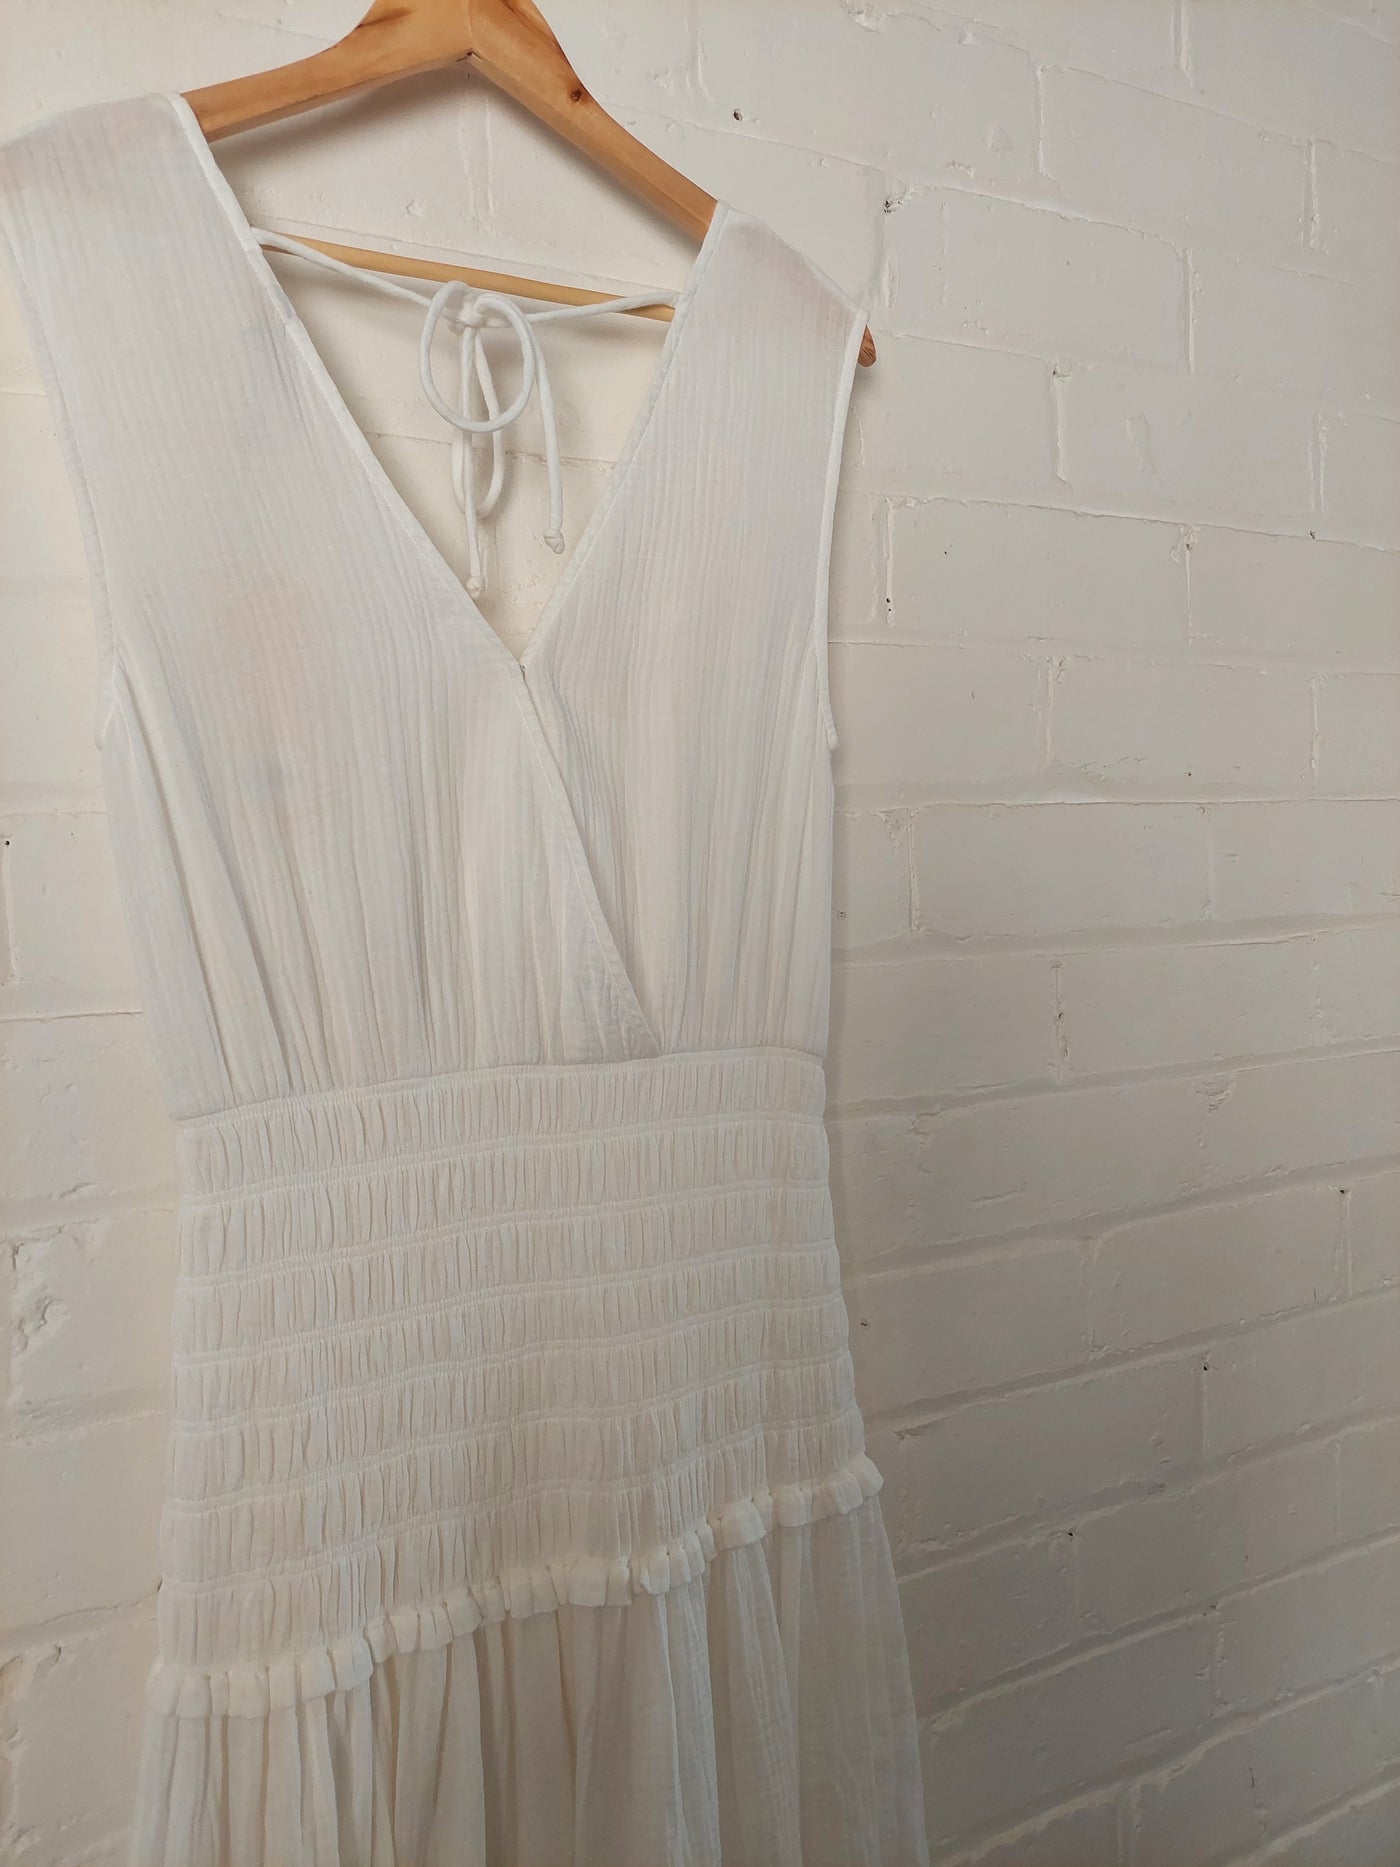 Bec and Bridge BNWT Aleah Shirred Dress - Ivory, Size 10